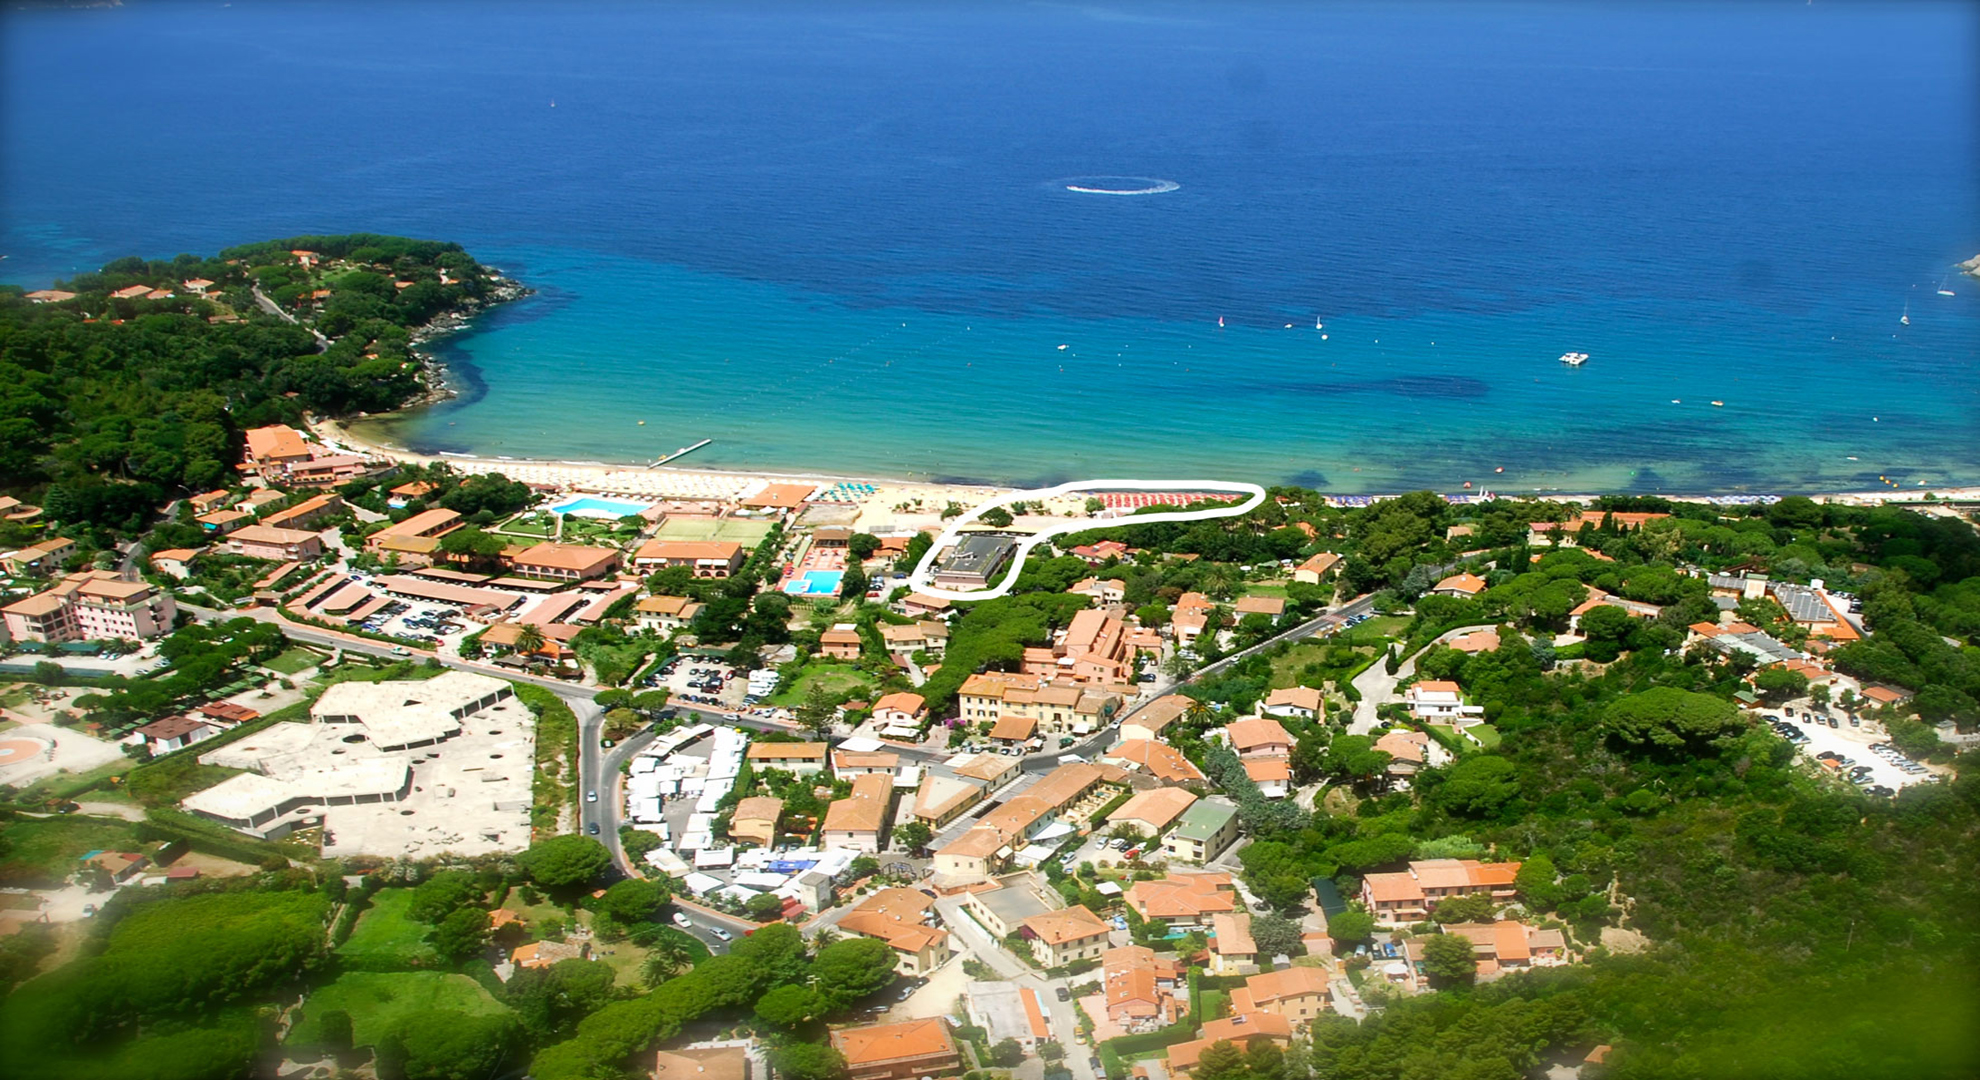 Seaside holidays at the Hotel Delfino on the island of Elba